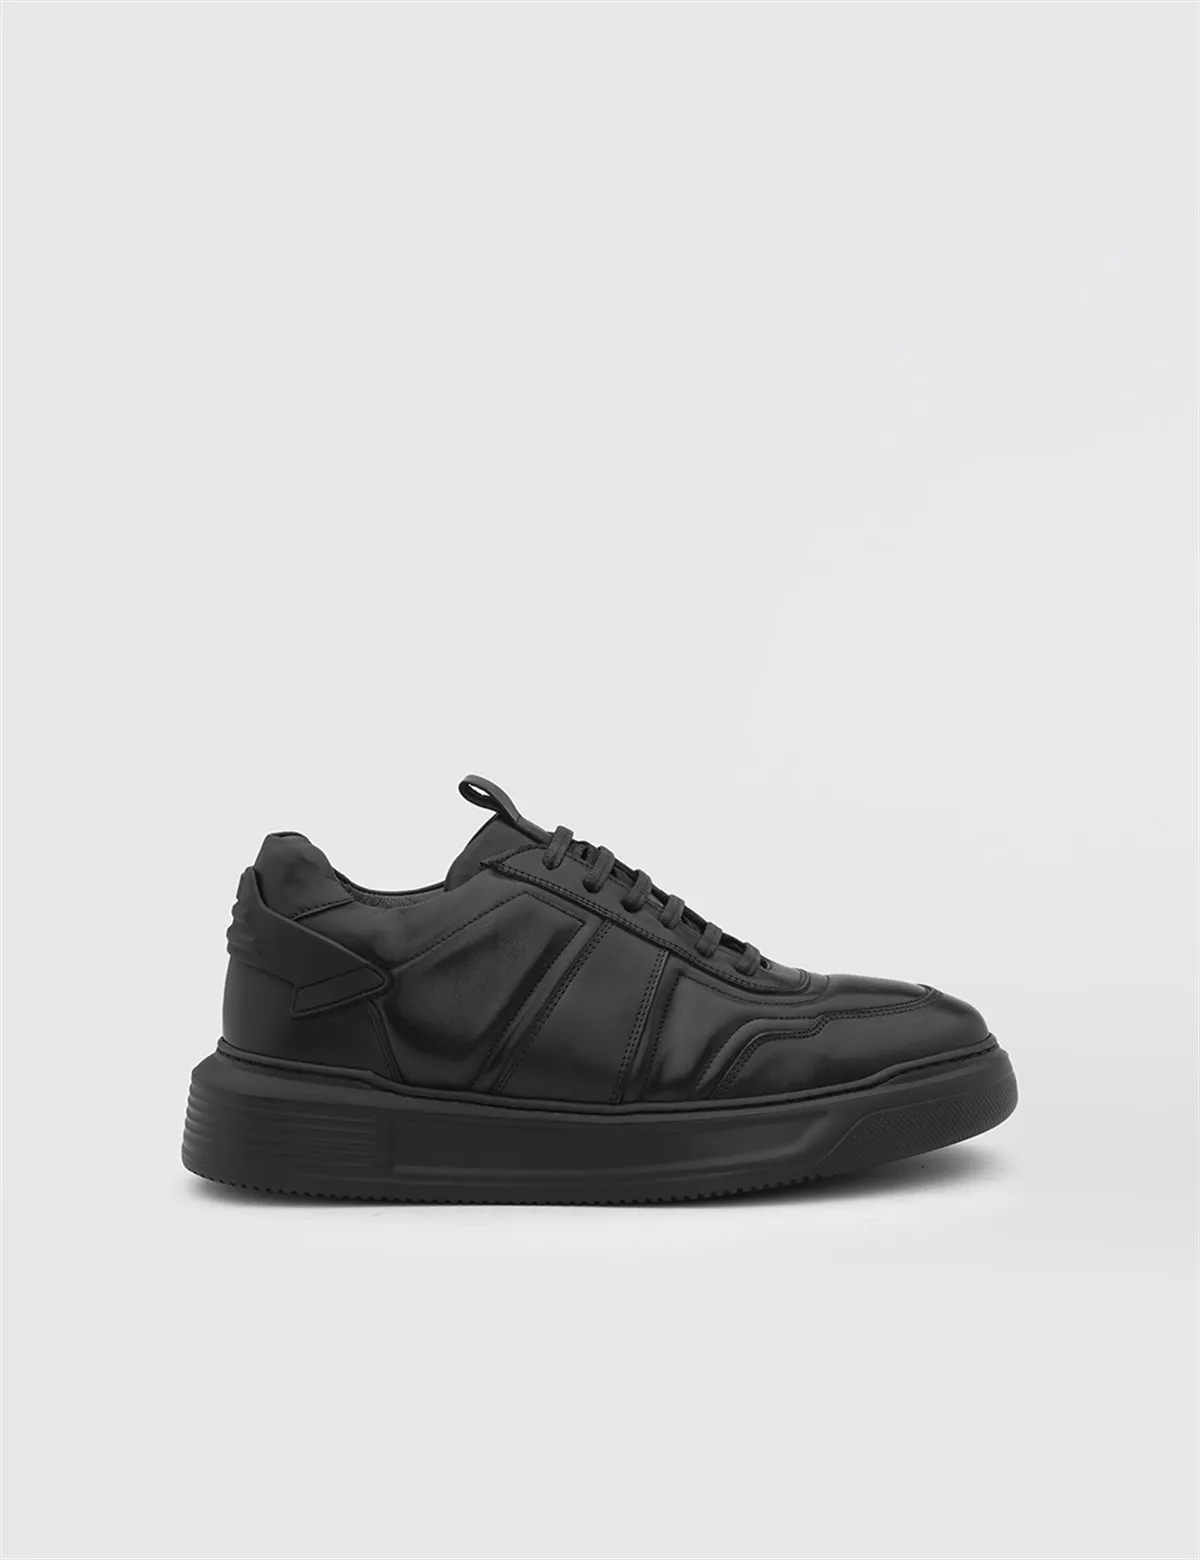 

ILVi-Genuine Leather Handmade Fagus Black Nappa Sneaker Man's Shoes 2022 Fall/Winter